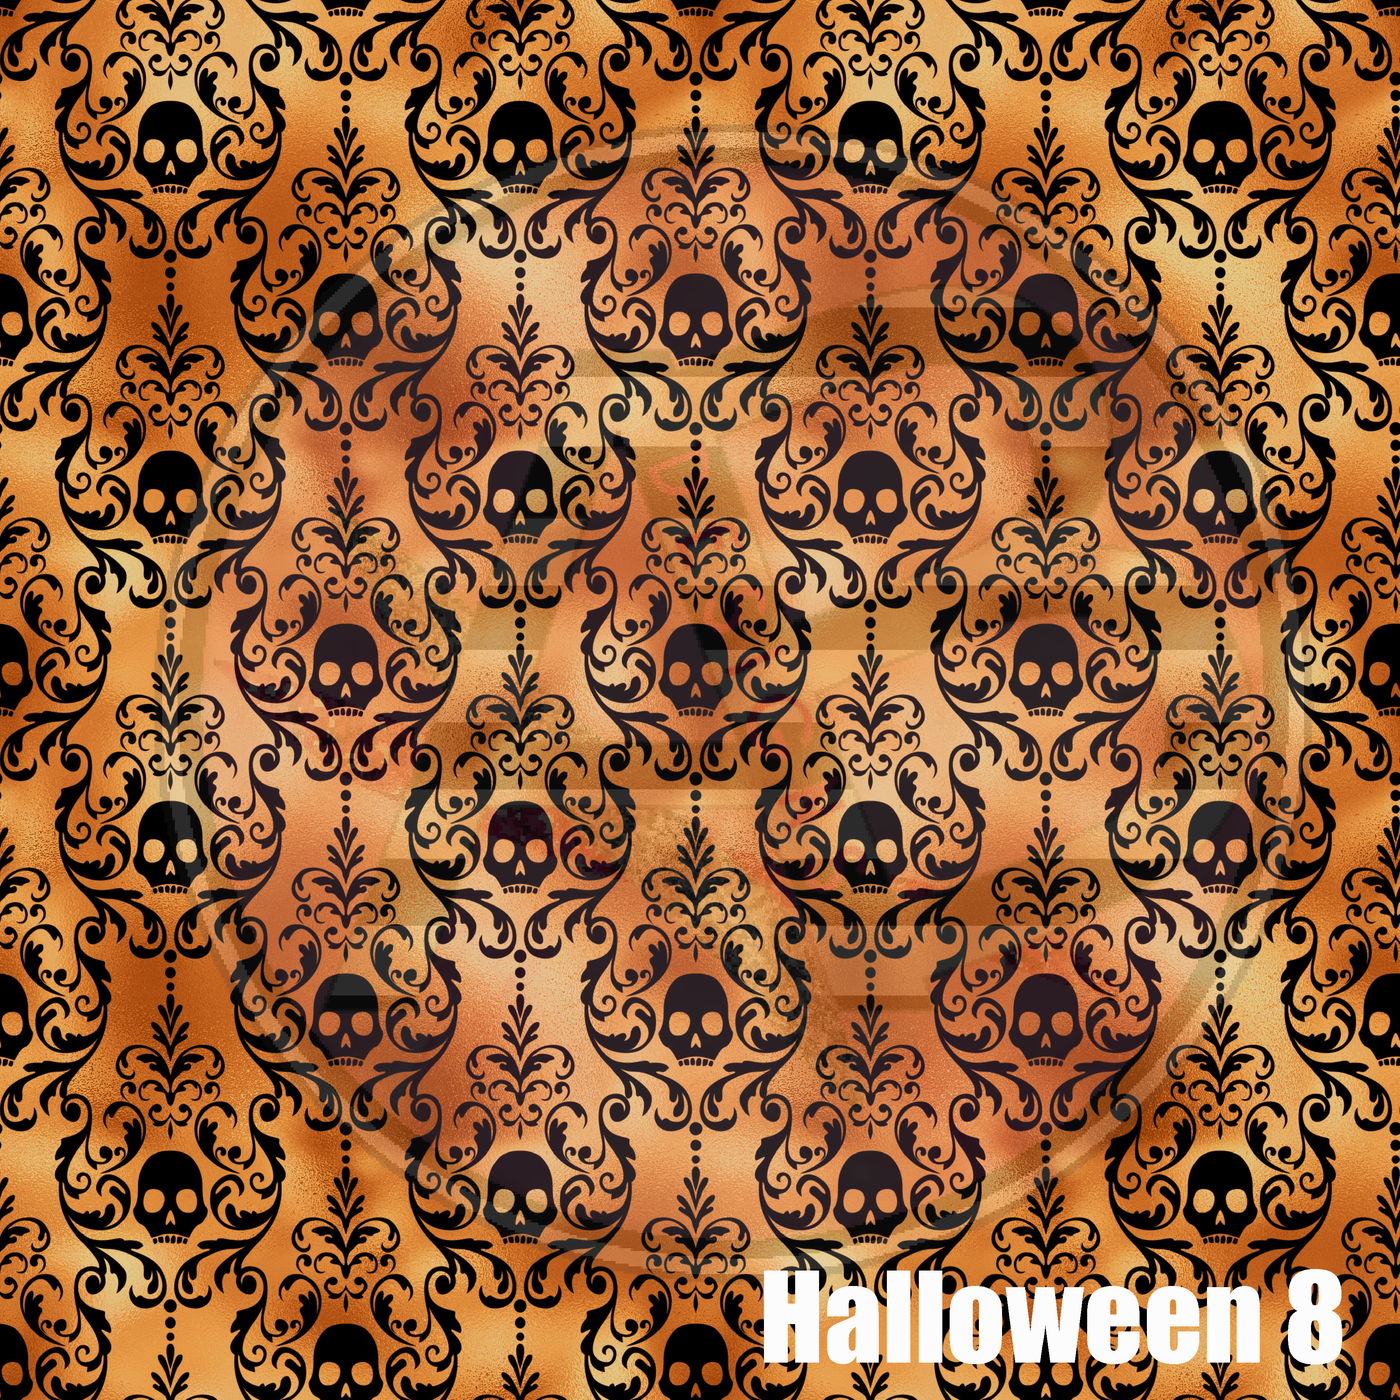 Adhesive Patterned Vinyl - Halloween 8